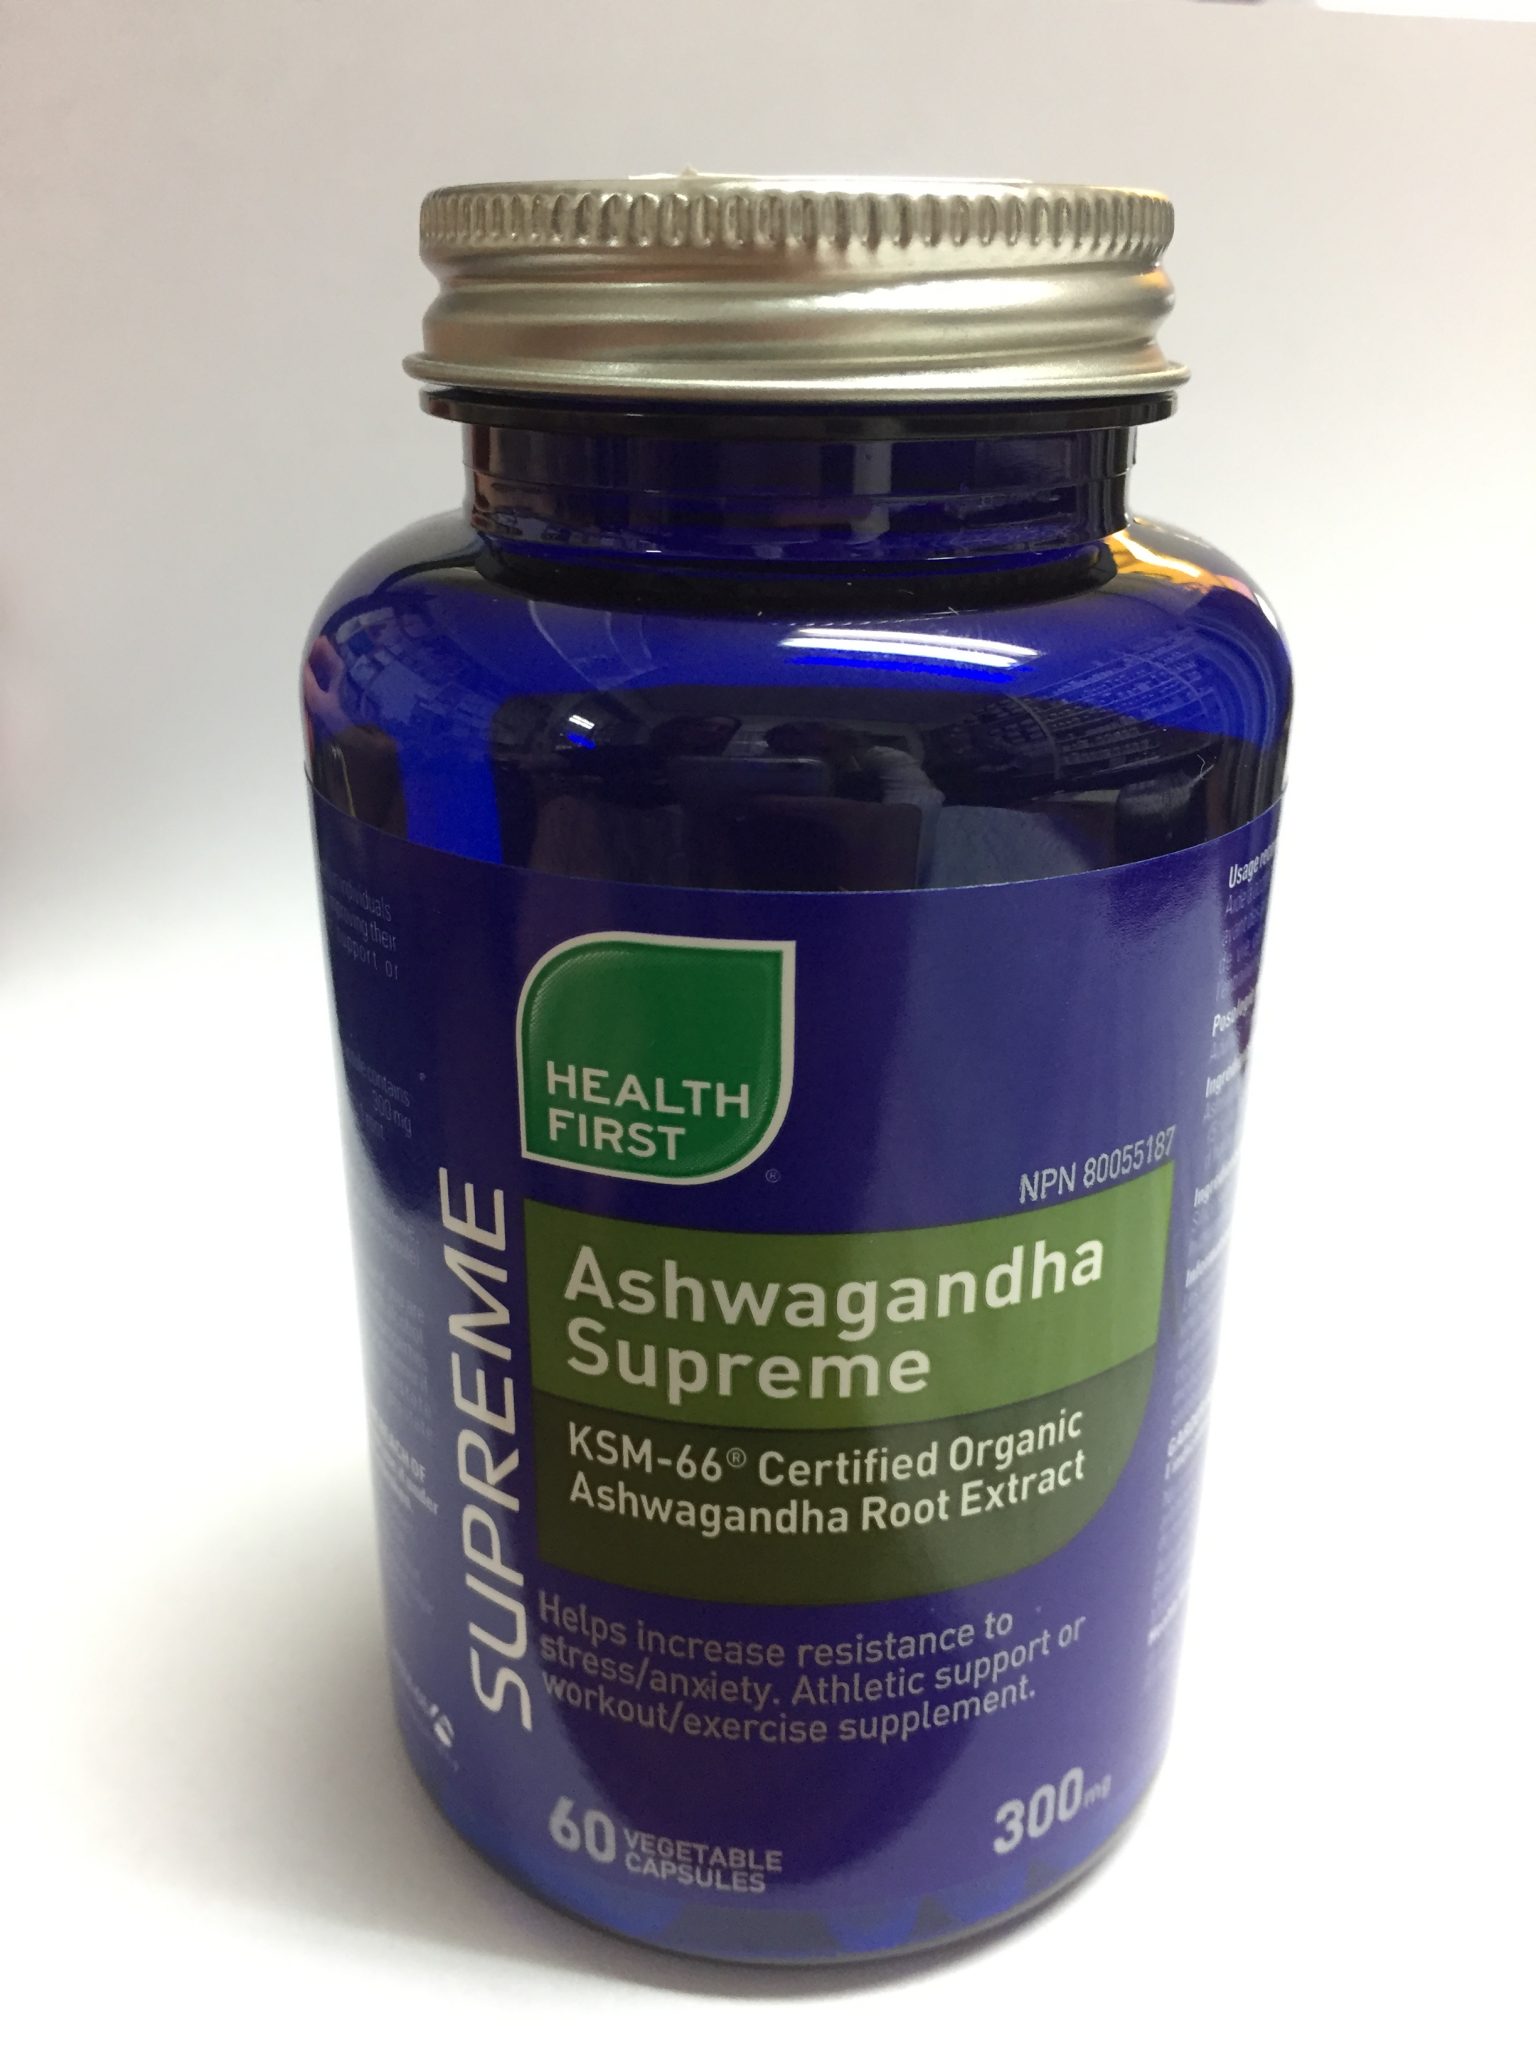 Ashwagandha Supreme KSM-66 Certified Organic Ashwagandha Root Extract 300mg 60 Vcaps (Health First)